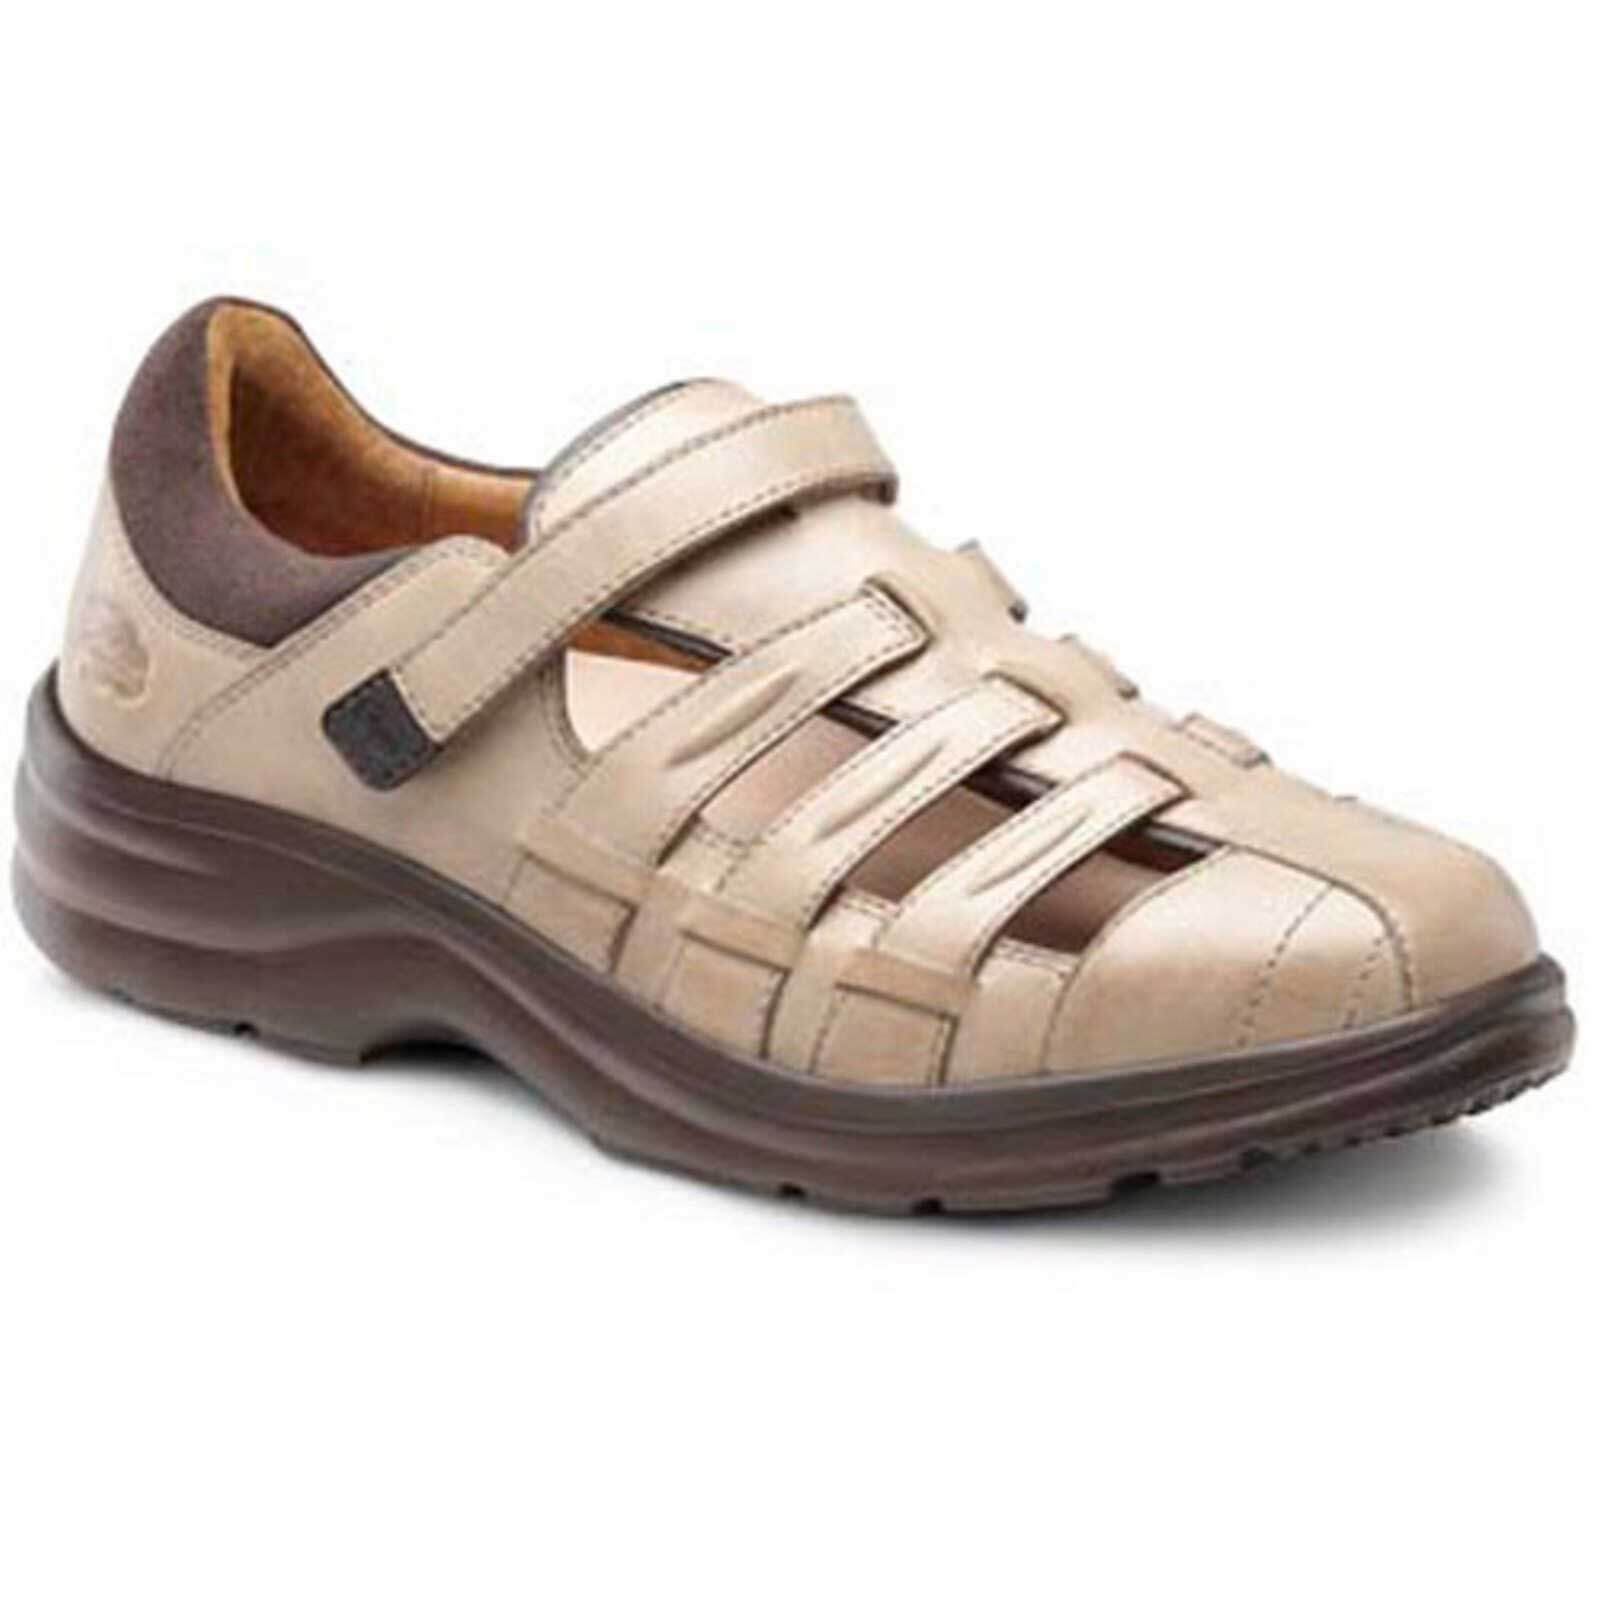 Dr. Comfort Shoes Breeze Women's Sandal - Comfort Therapeutic Diabetic Sandal - Removable Footbeds - Extra Wide